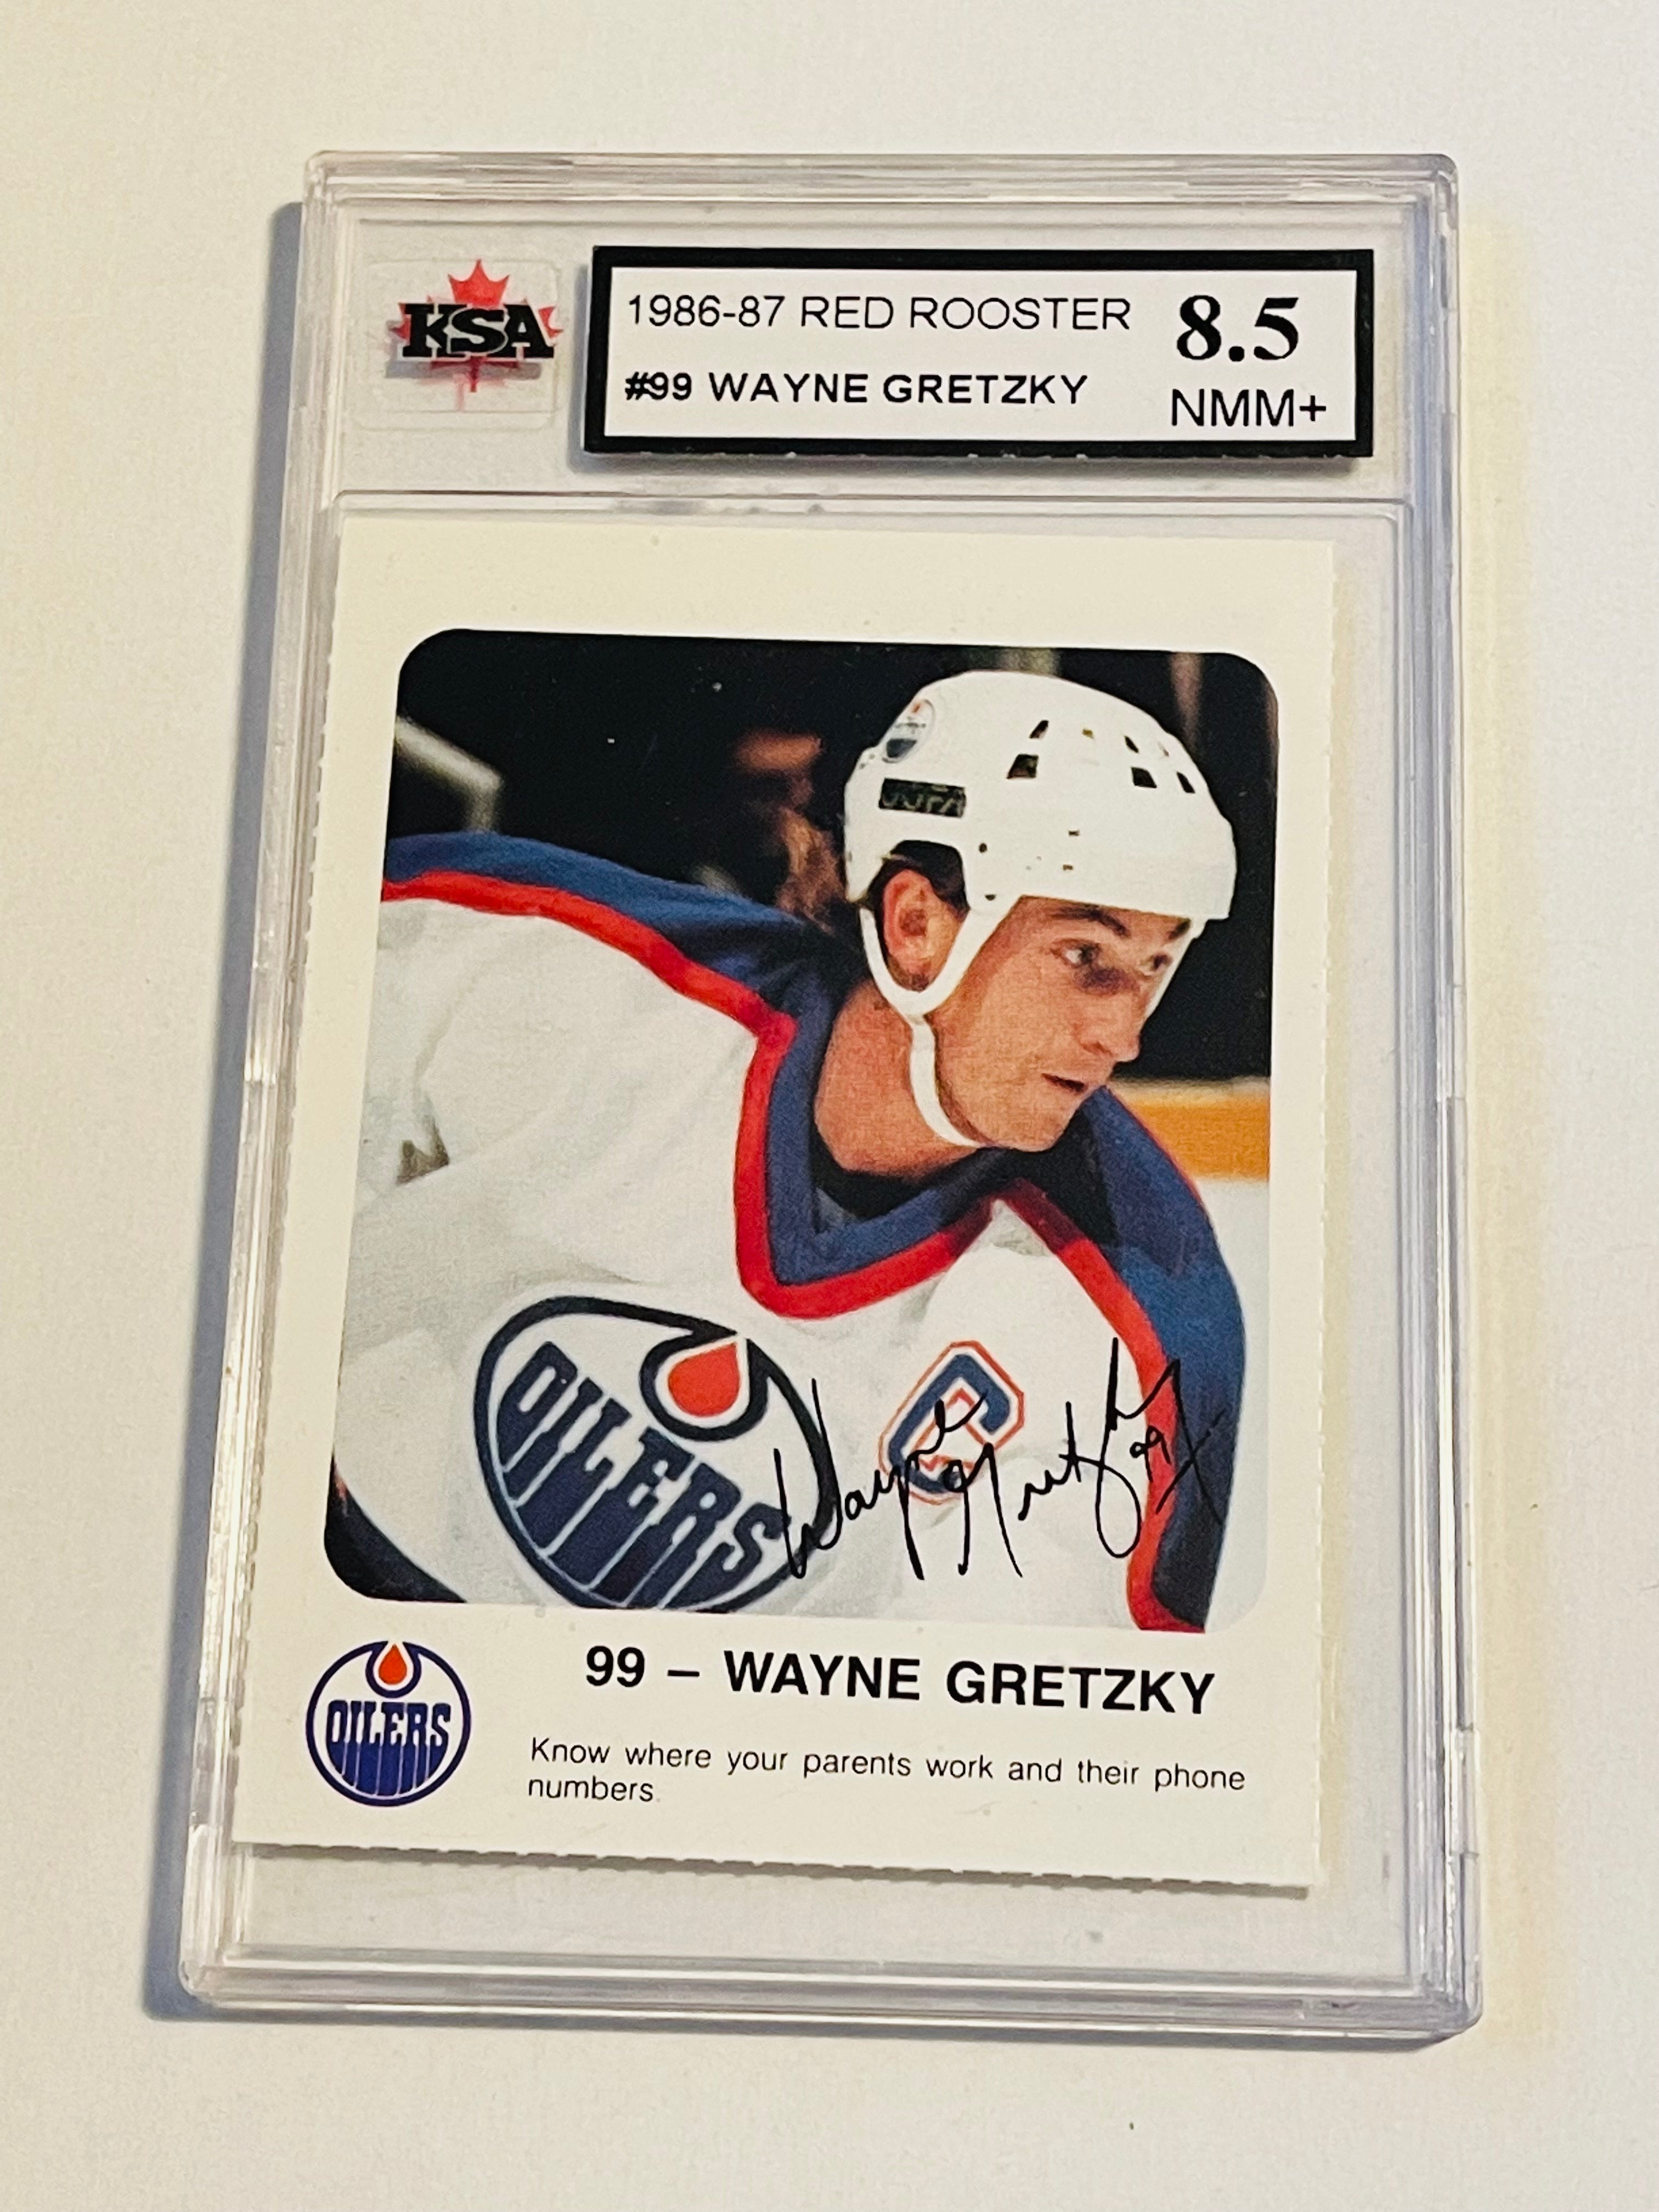 Wayne Gretzky Red Rooster High grade hockey card 1986-87